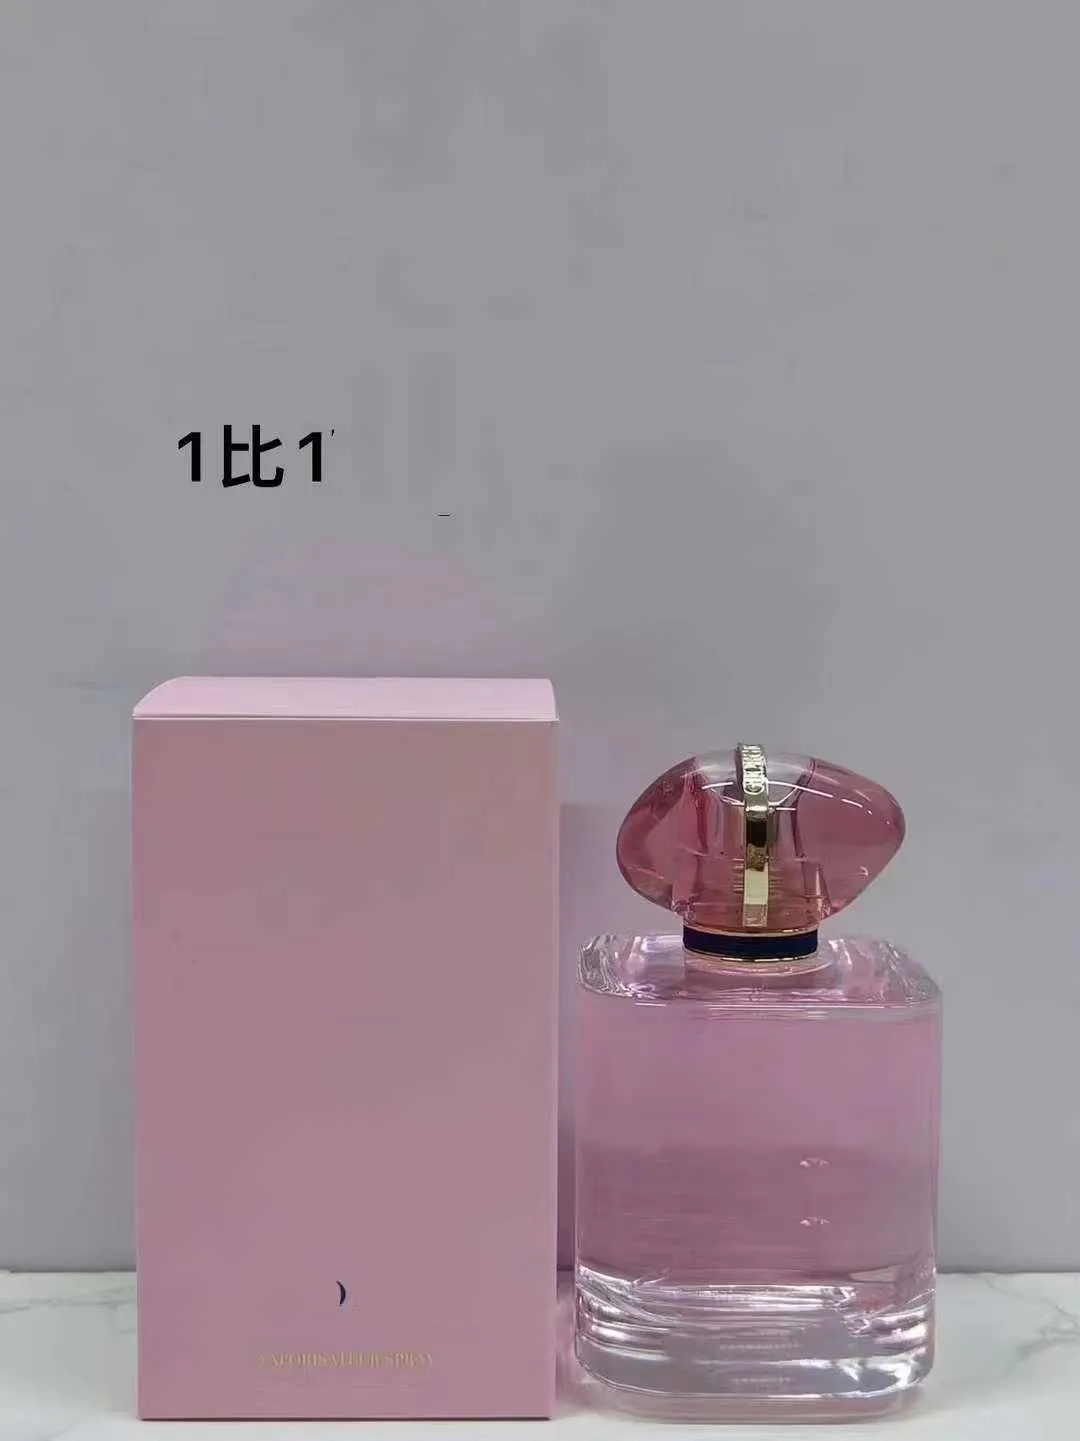 Tanzanita Atacado de comércio exterior transfronteiriço perfume de grande marca 100ml perfume malaquita si1: 1 Luzhou fragrância perfume durável 166